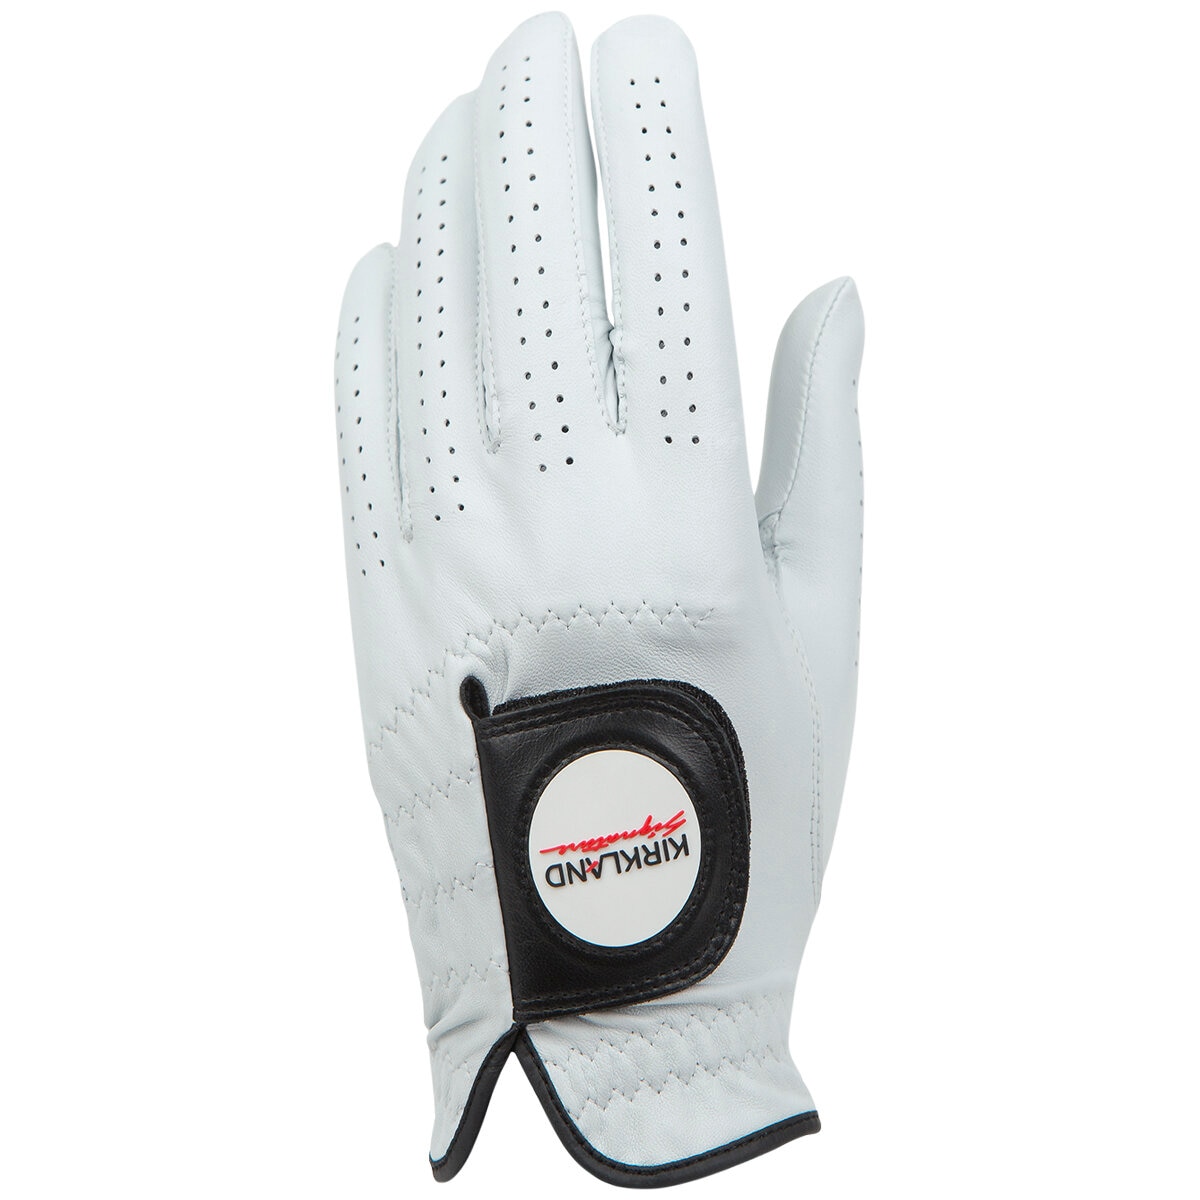 Kirkland Signiture Men's Premium Golf Gloves 4 pack